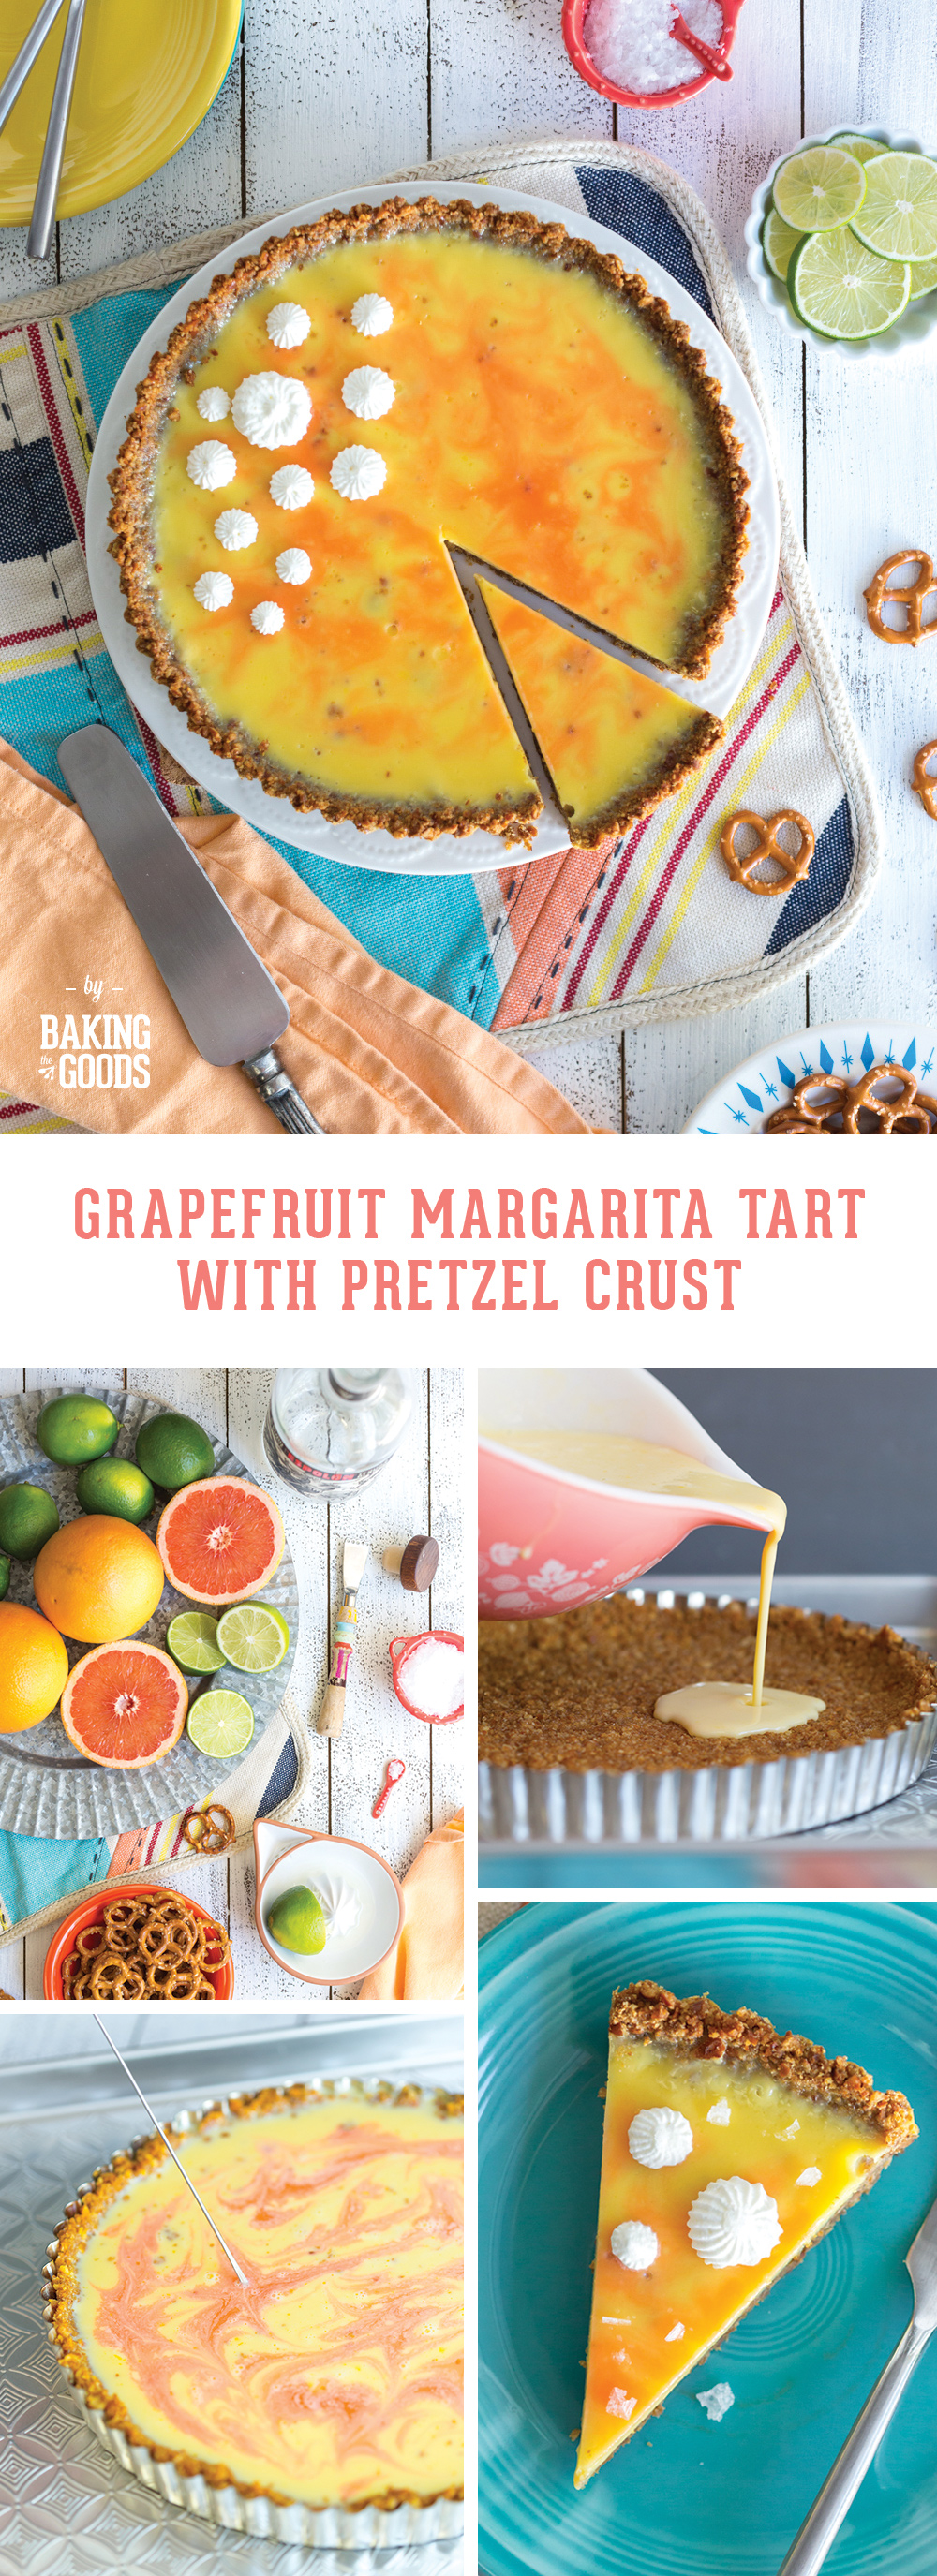 Grapefruit Margarita Tart with Pretzel Crust by Baking The Goods